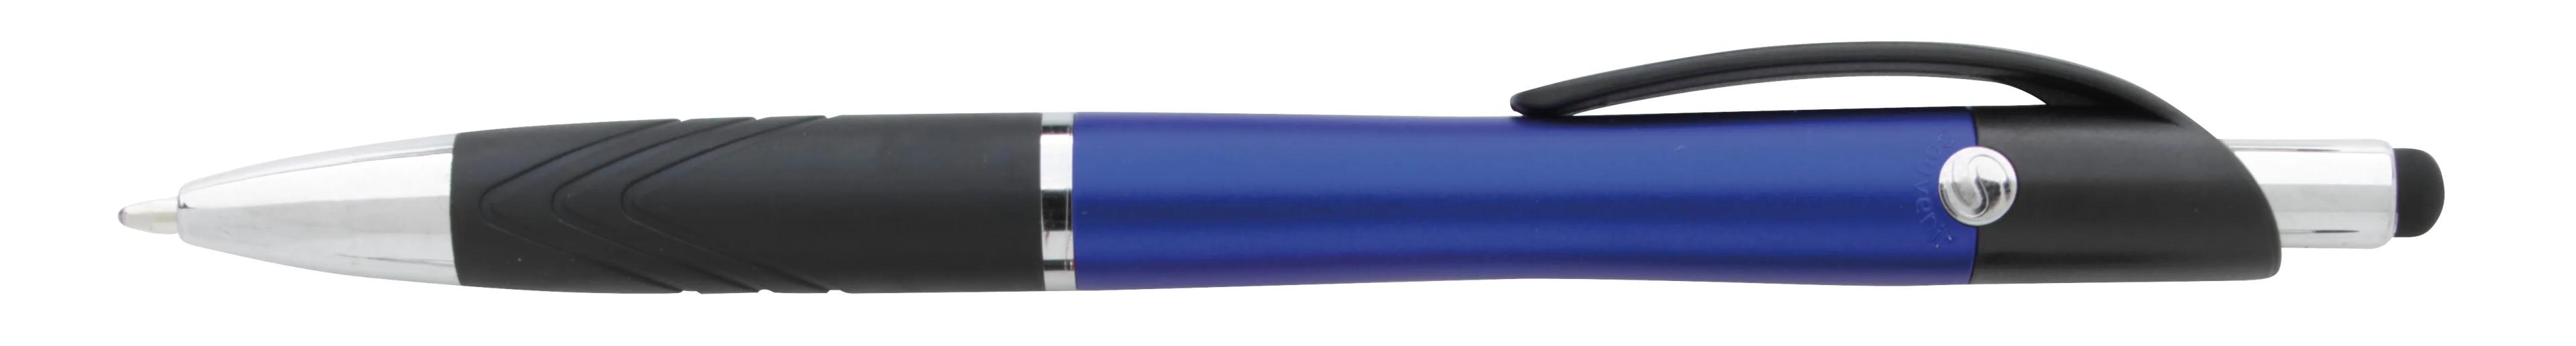 Souvenir® Emblem Stylus Pen 17 of 37